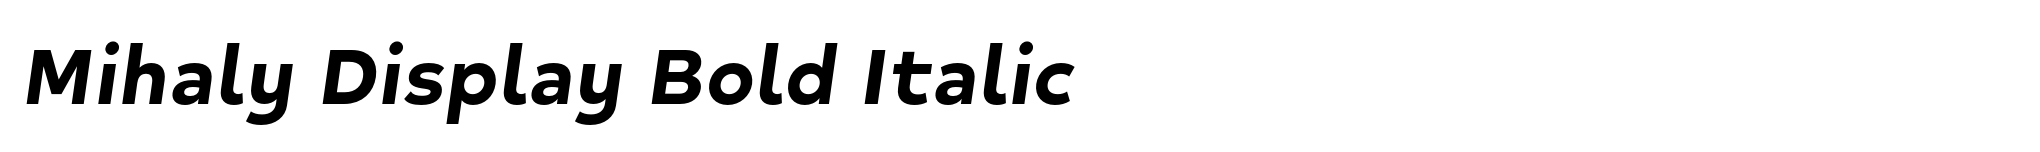 Mihaly Display Bold Italic image